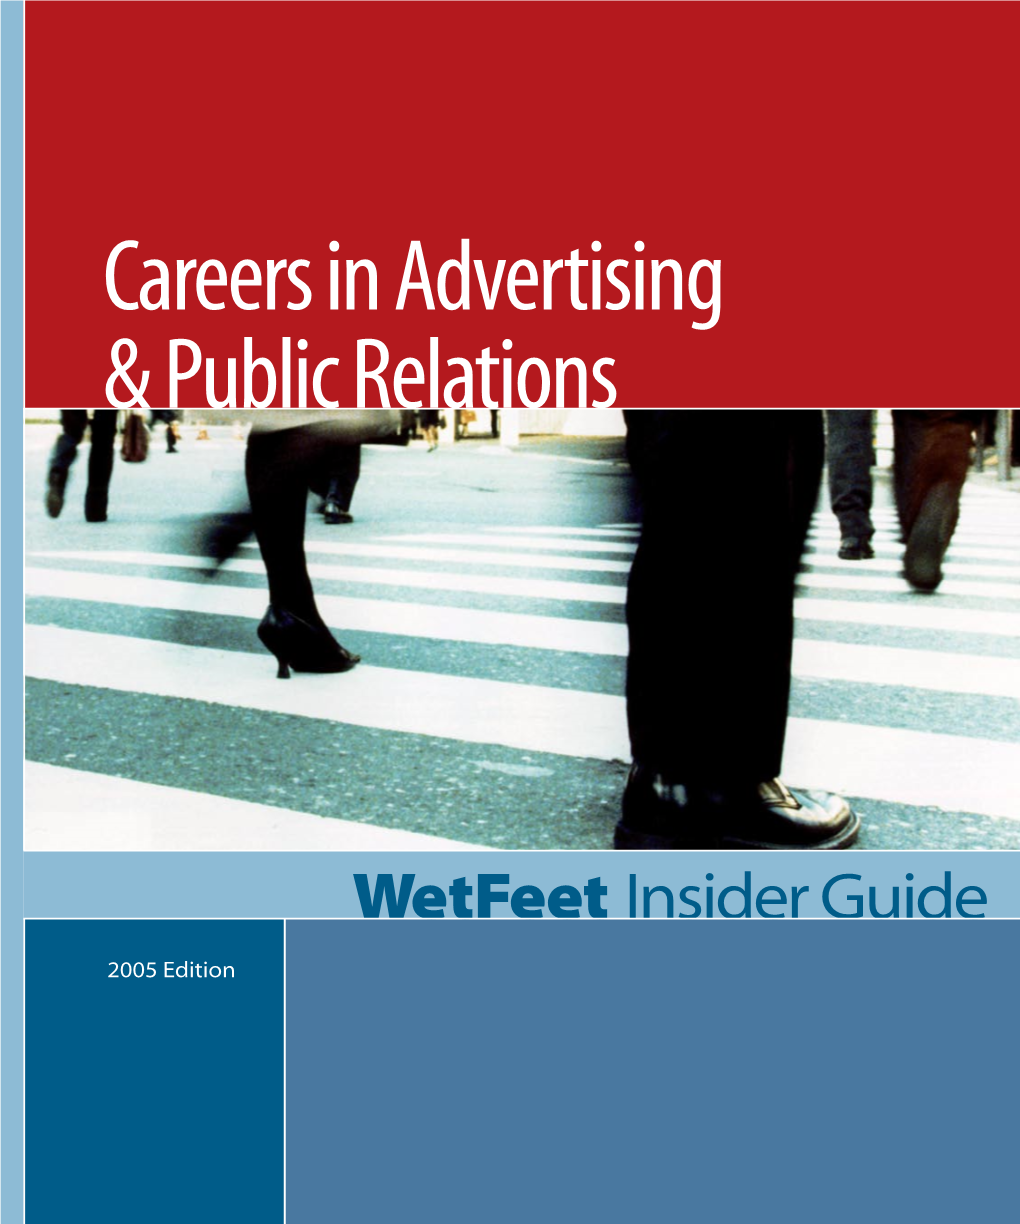 Careers in Advertising & Public Relations